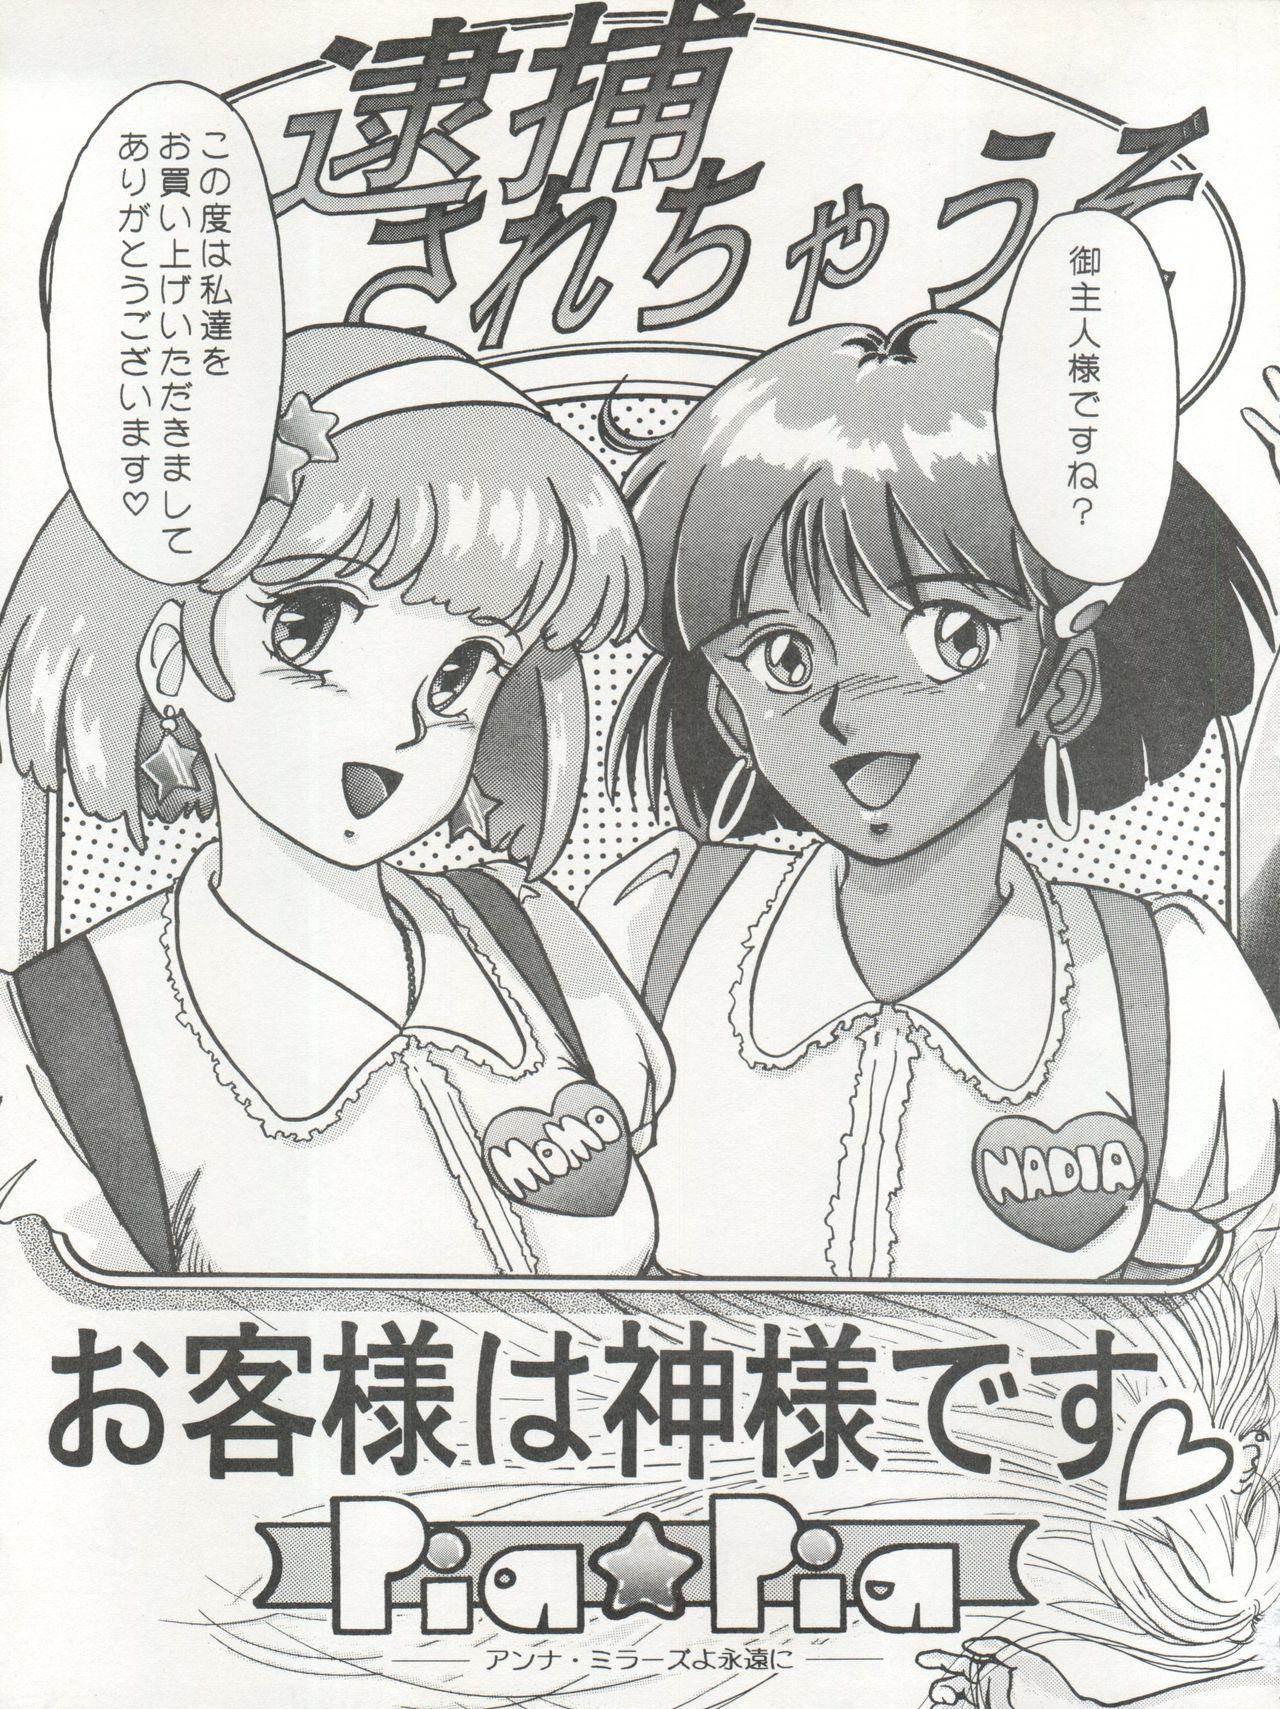 Best Blow Job 逮捕されちゃうぞ - Fushigi no umi no nadia Youre under arrest Minky momo 3x3 eyes Chick - Page 3